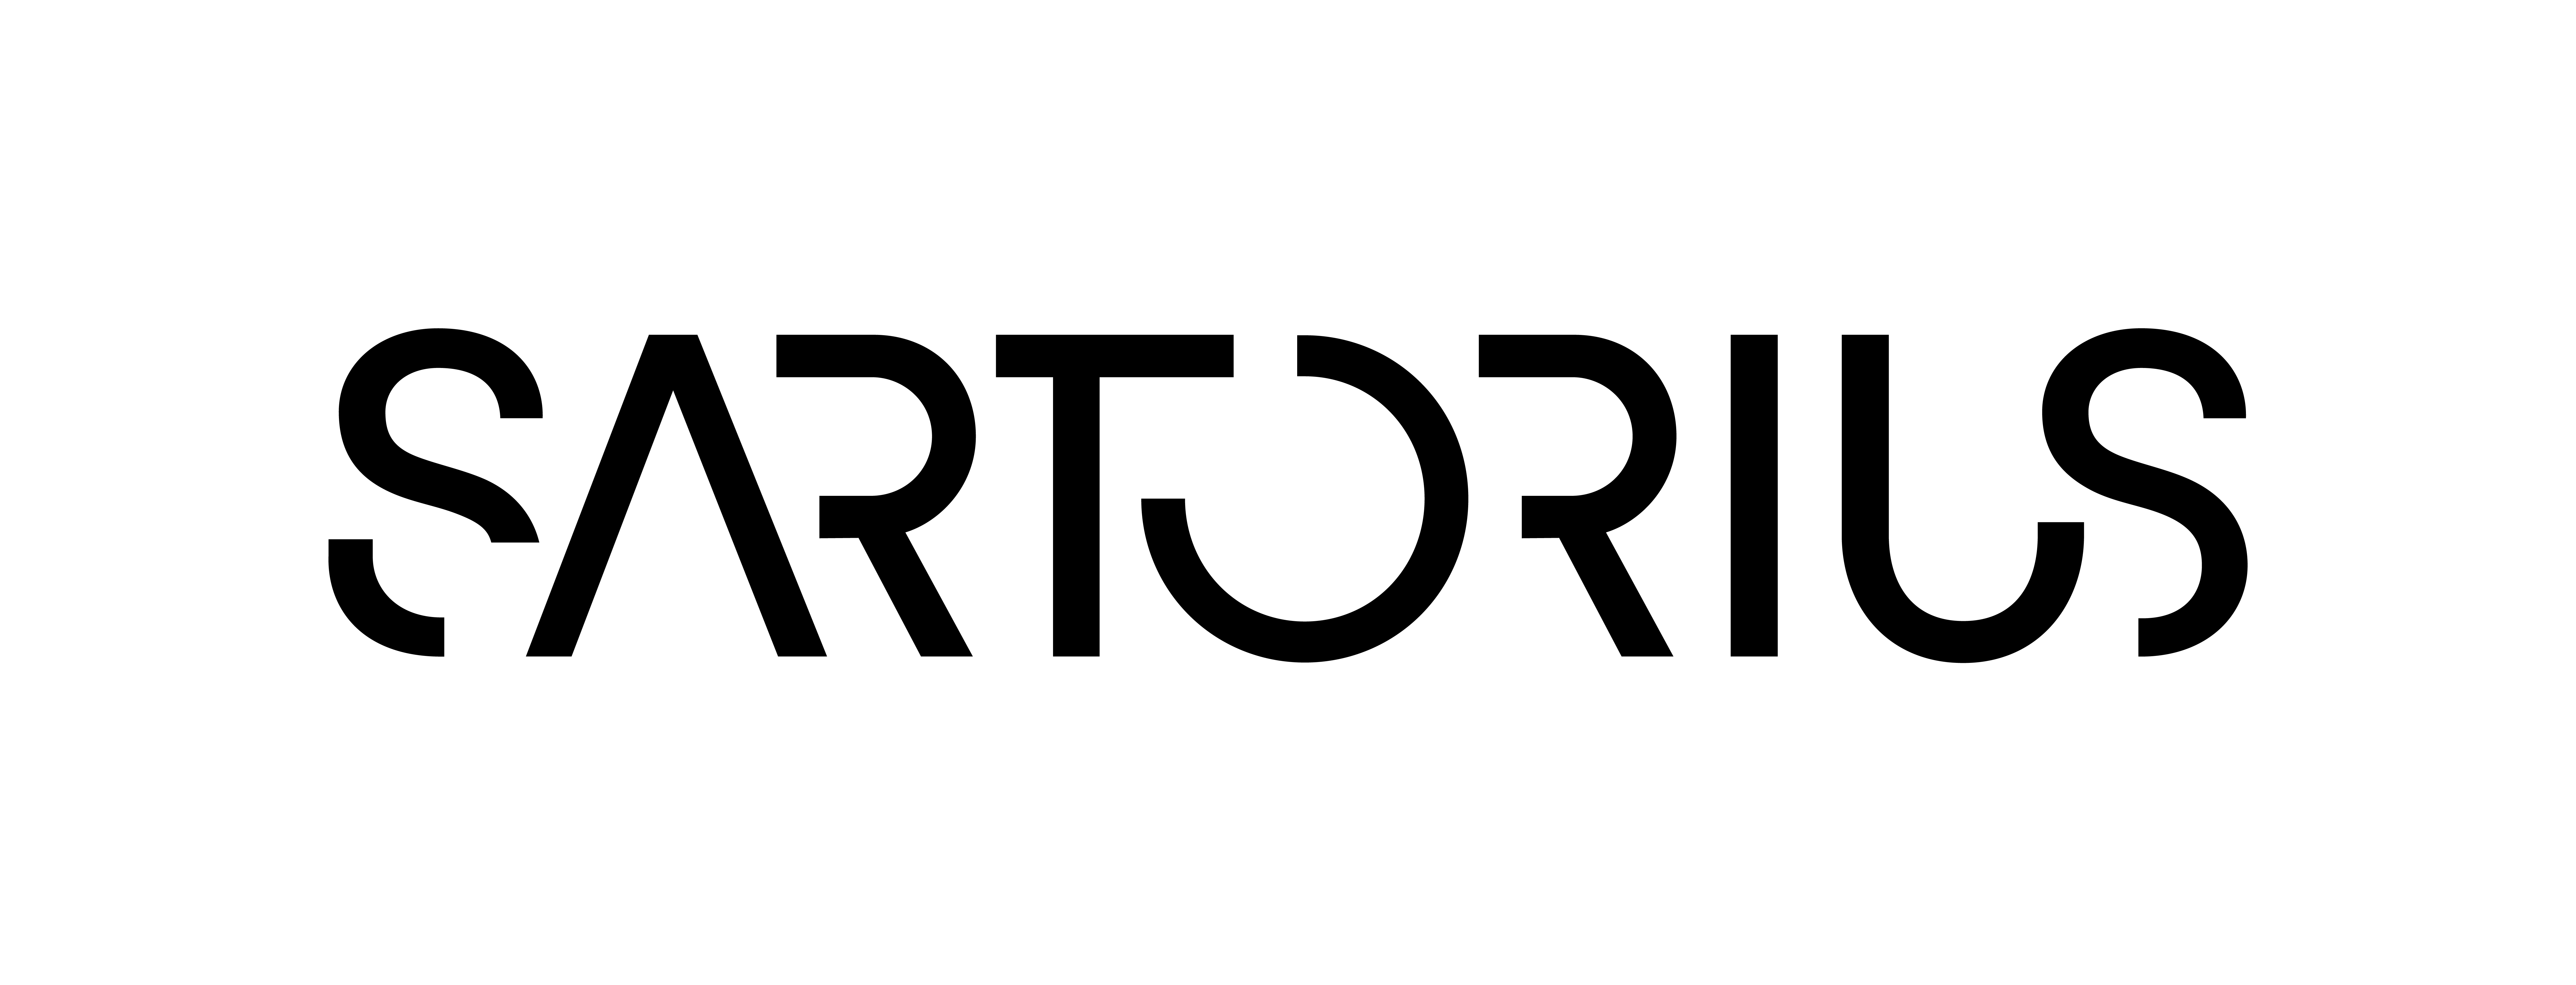 logo_sartorius